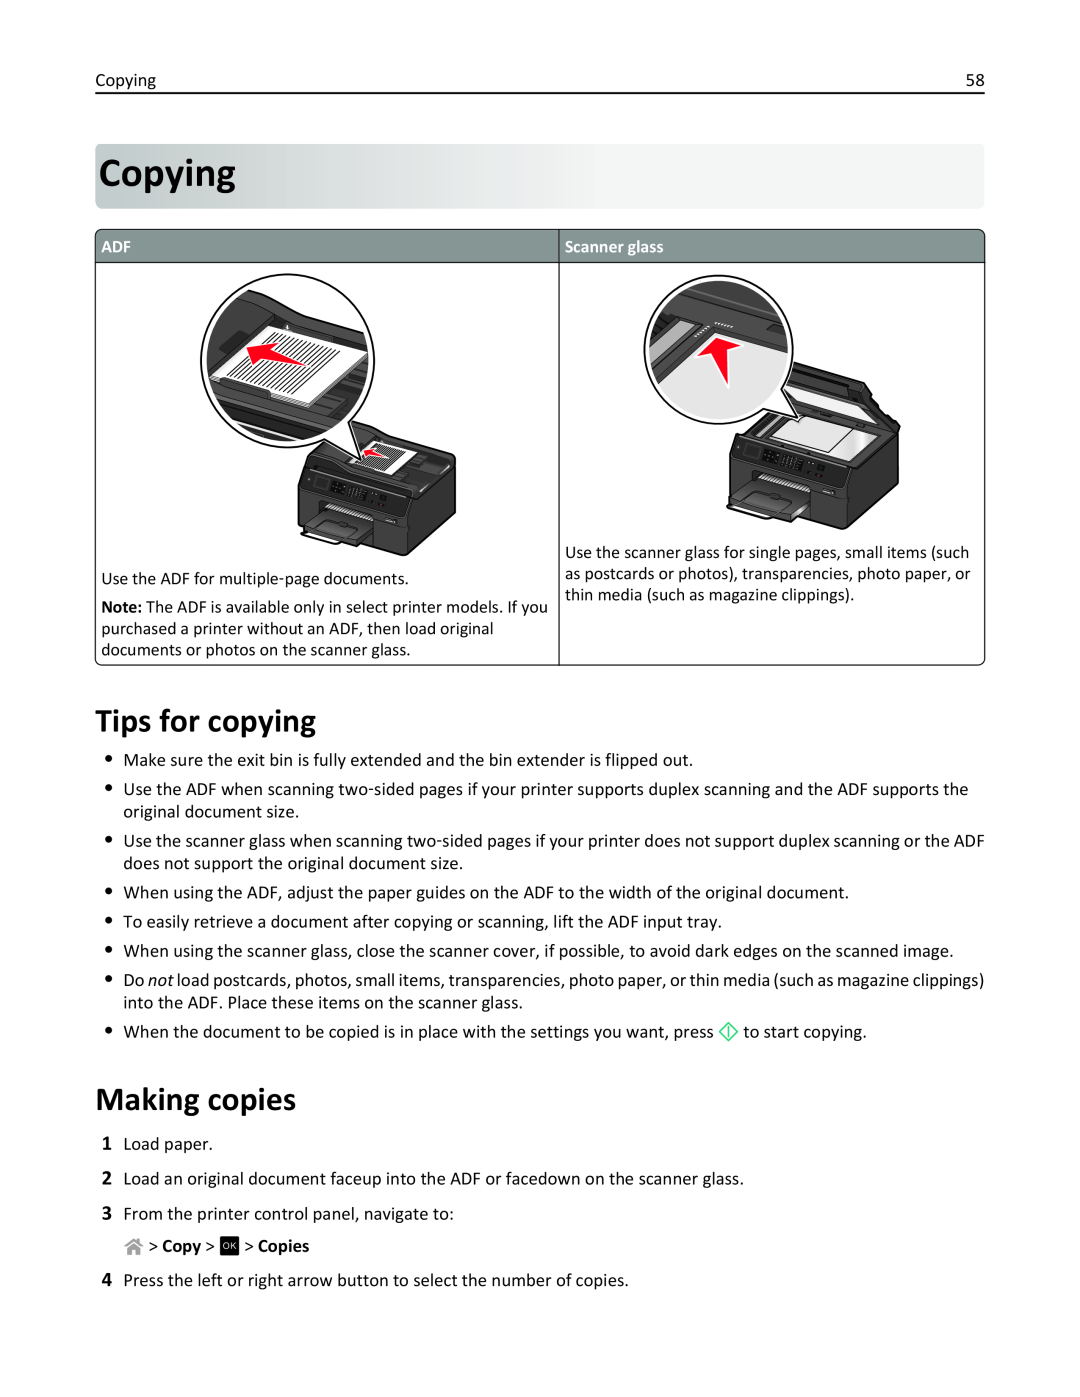 Lexmark PRO4000C, 90P3000 manual Copying, Tips for copying, Making copies, Copy OK Copies 